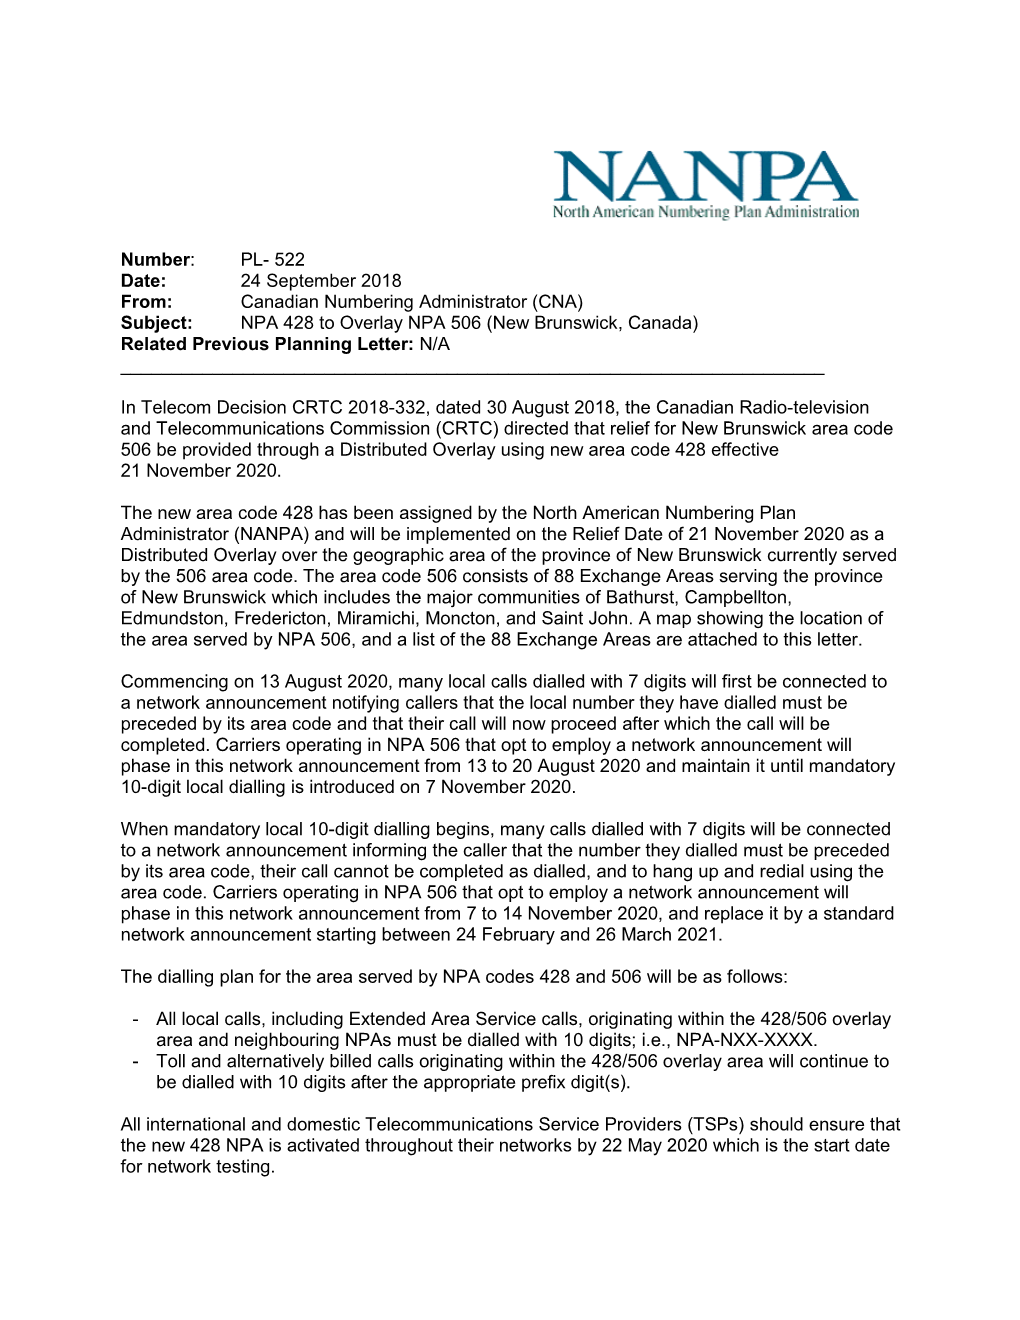 NPA 709 Planning Letter